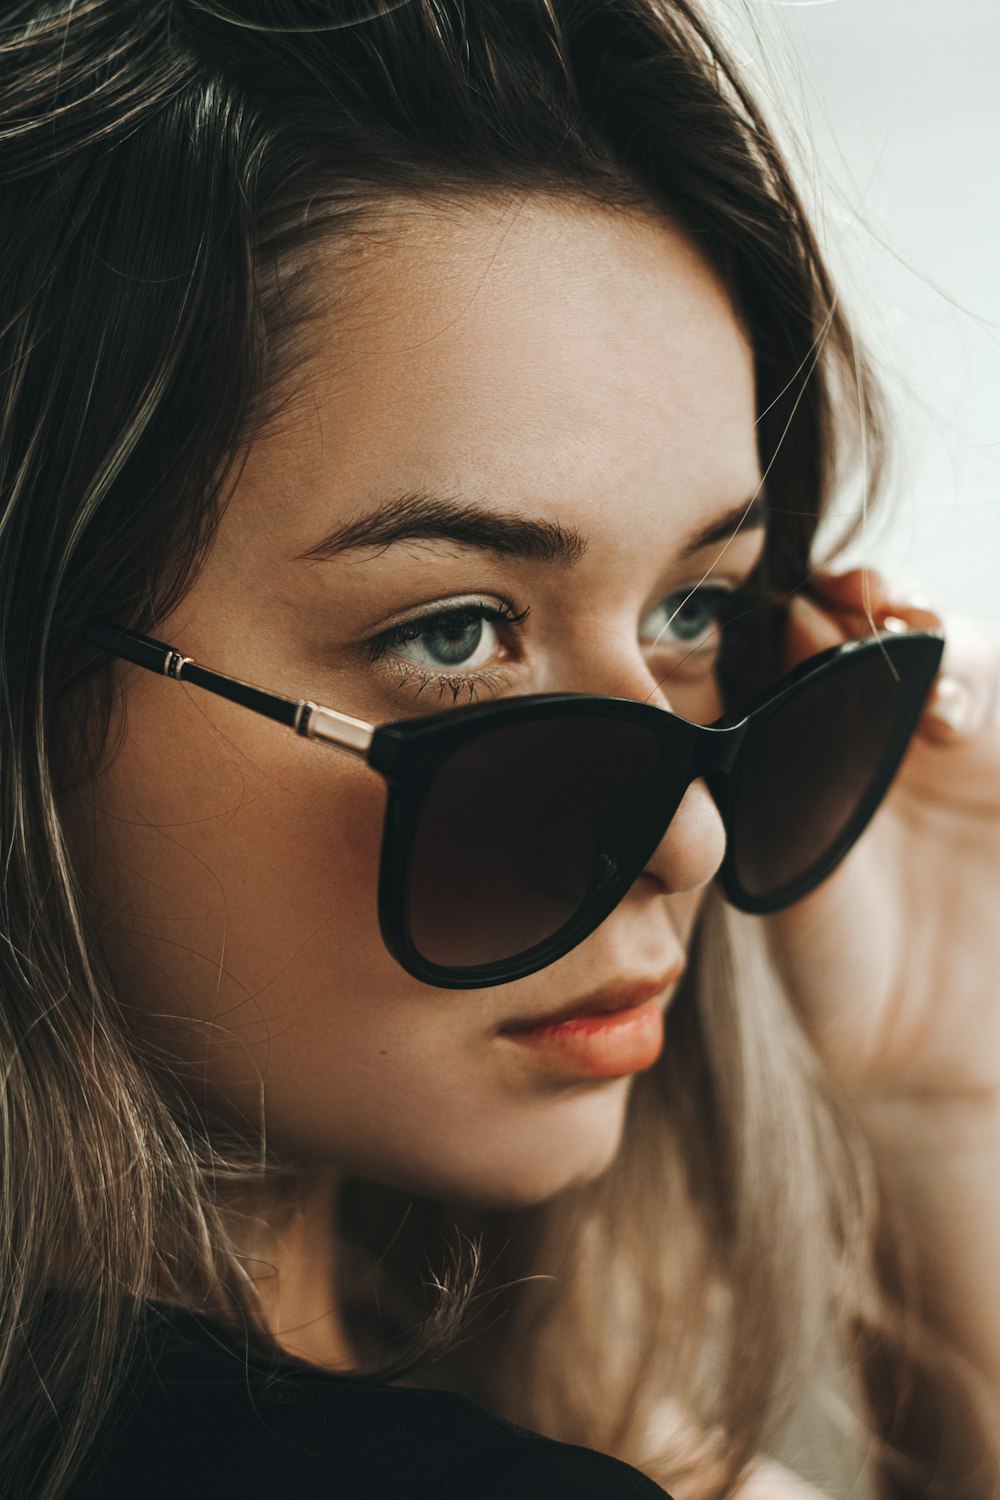 women's black framed sunglasses photo – Free Brown Image on Unsplash